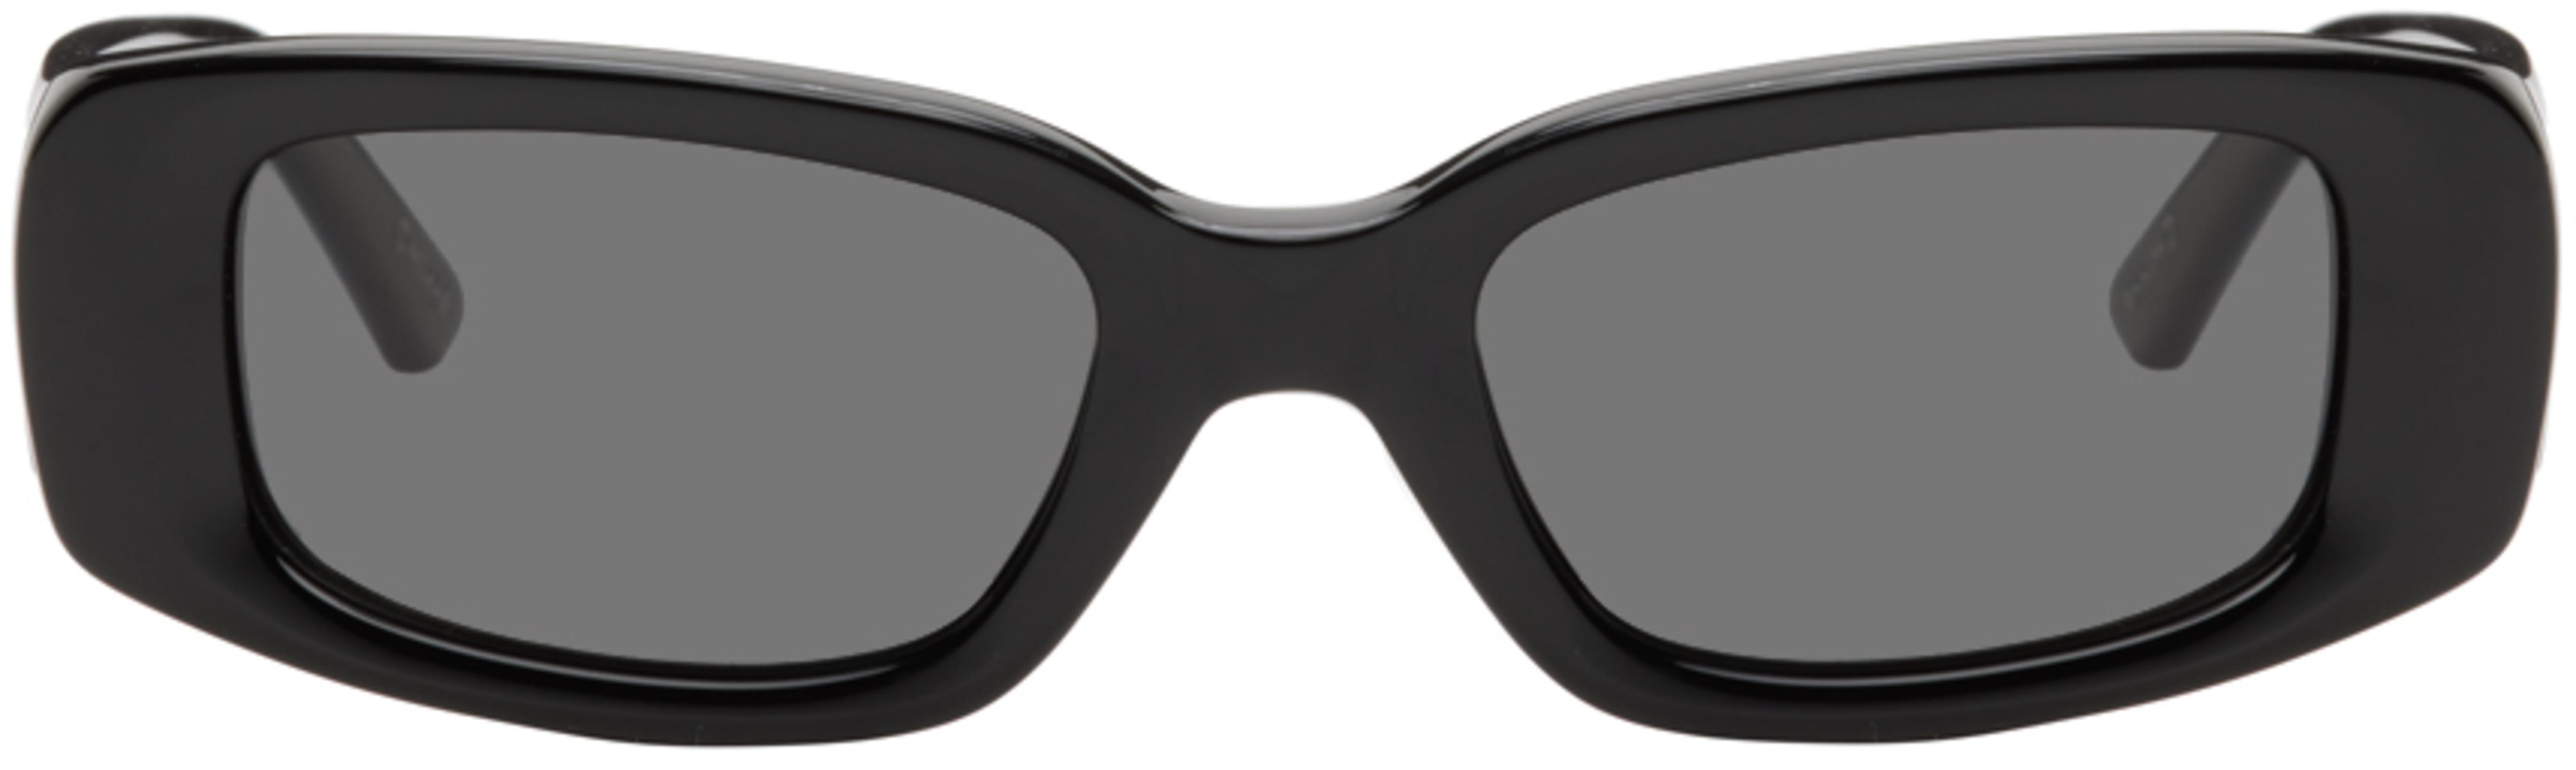 Black 10 Acetate Sunglasses by CHIMI